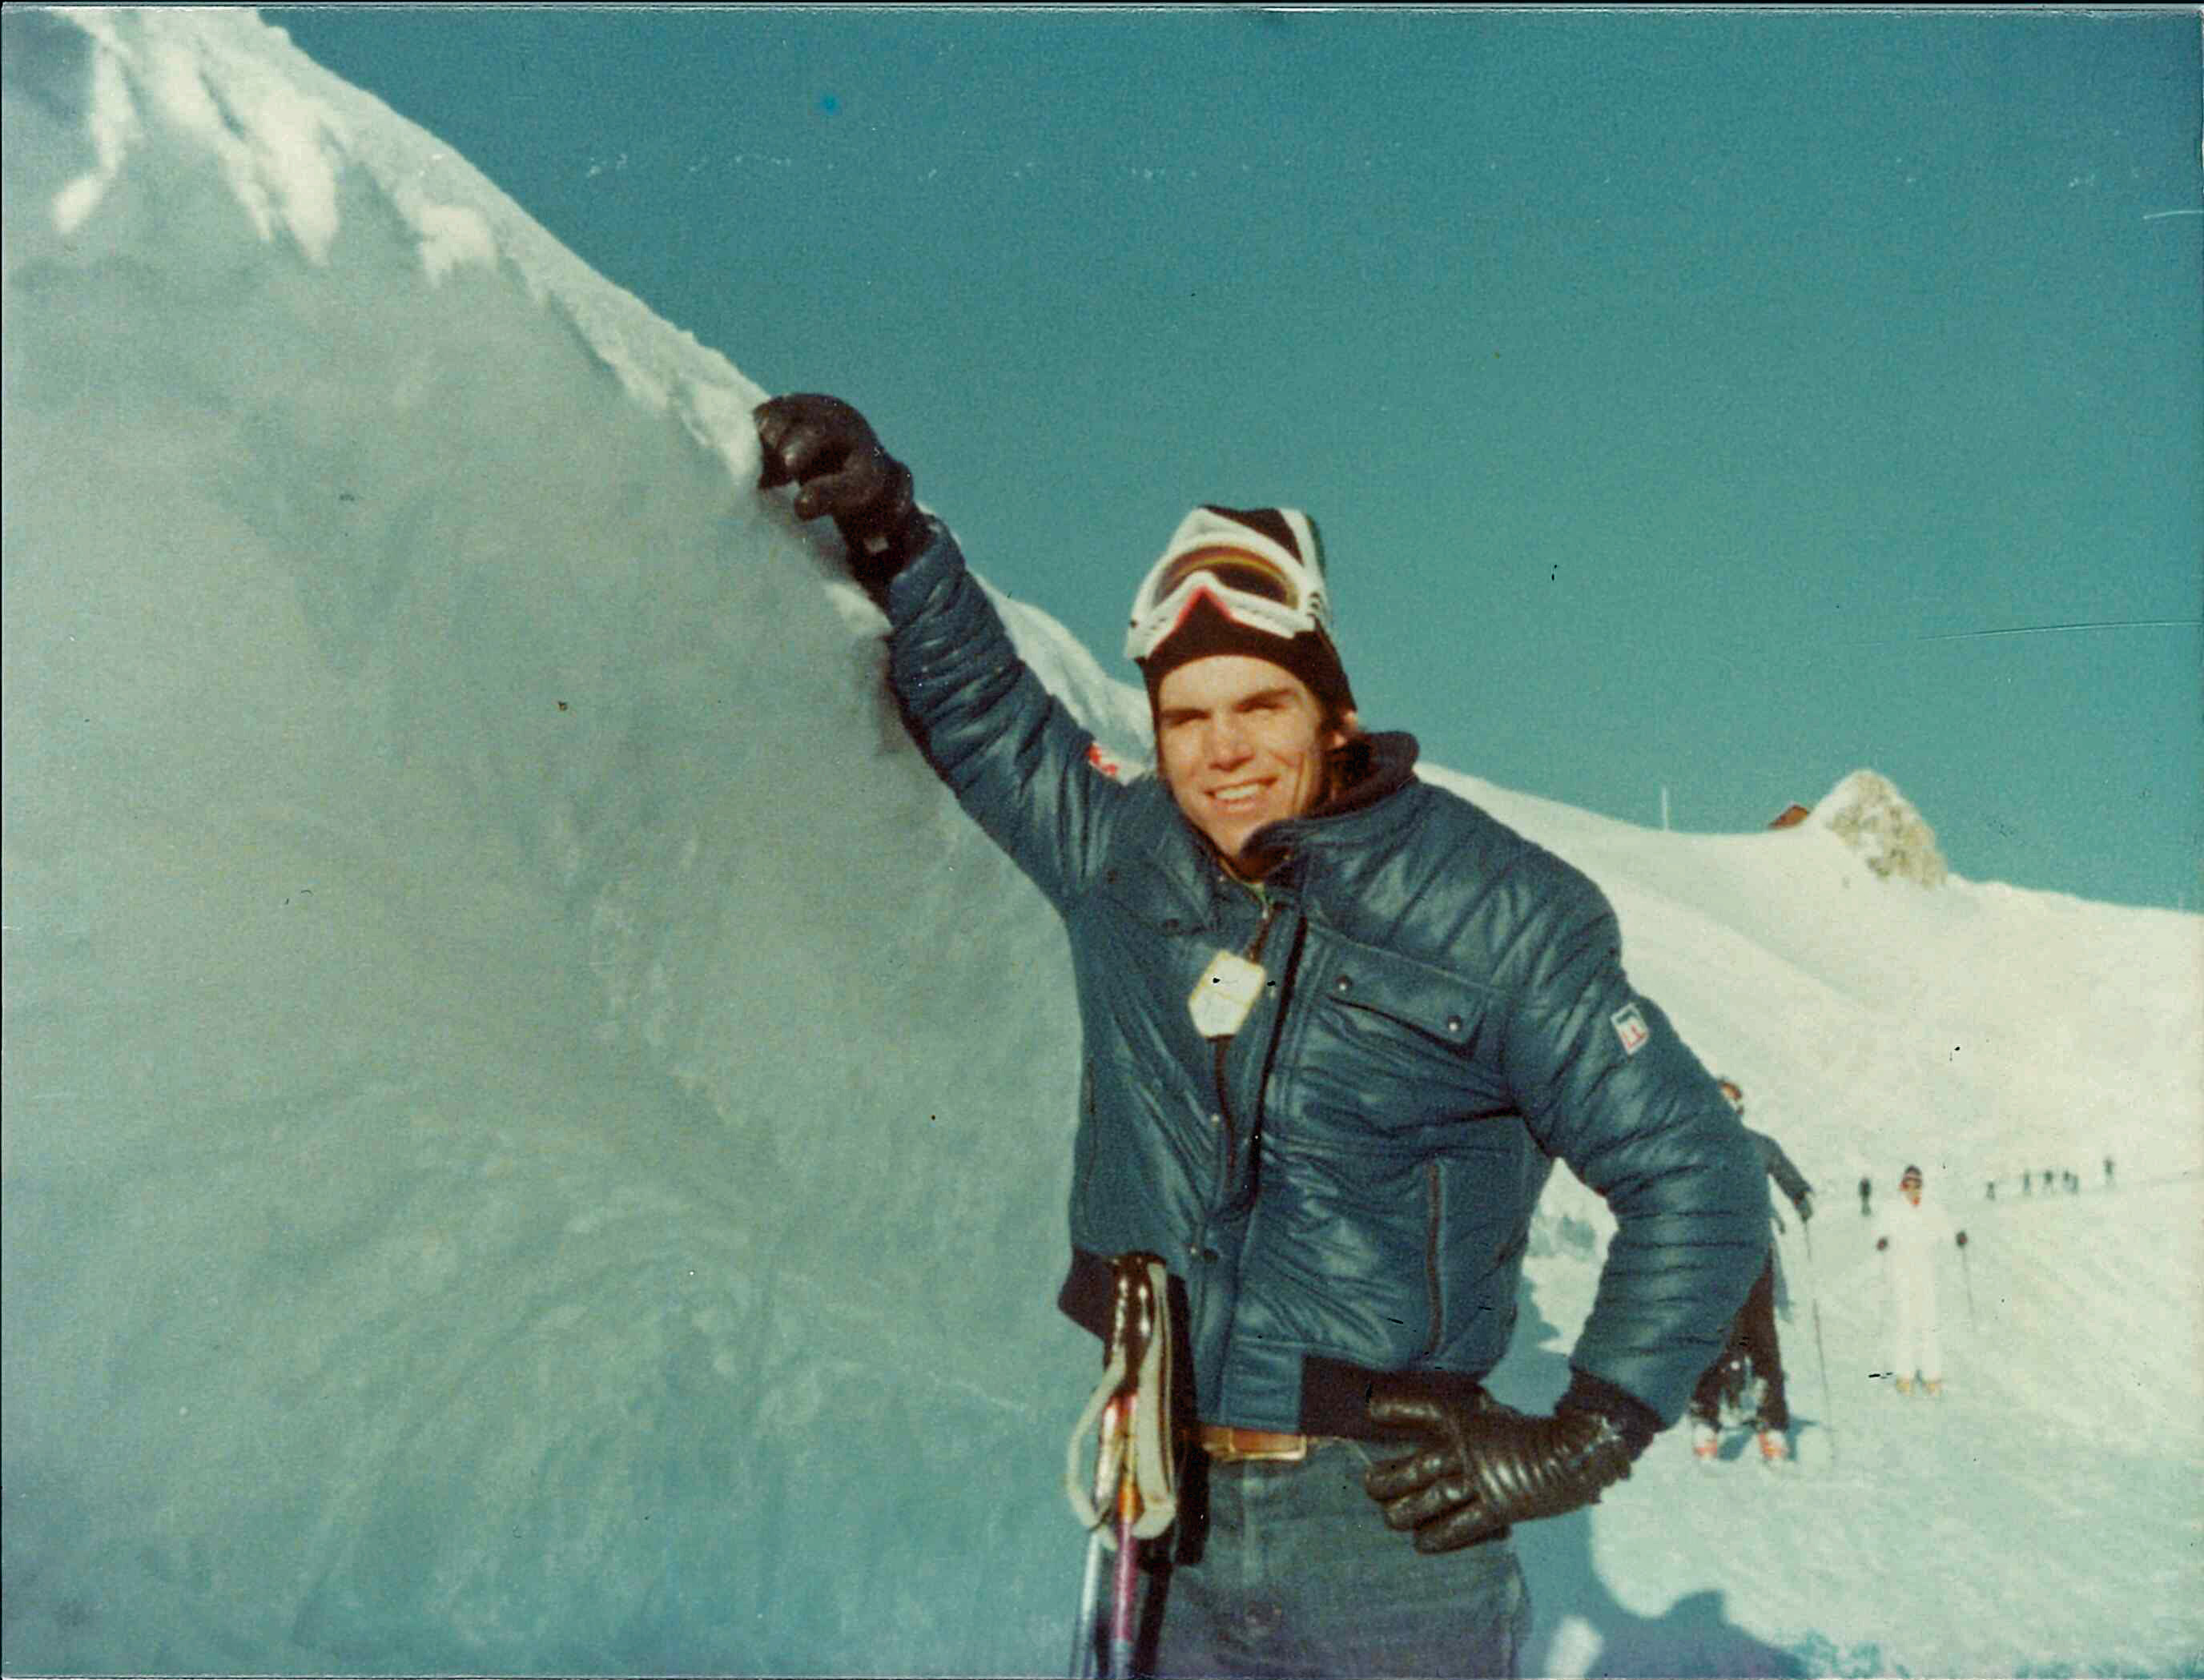 Bob Hart skiing in Switzerland during his Freshman year of college.